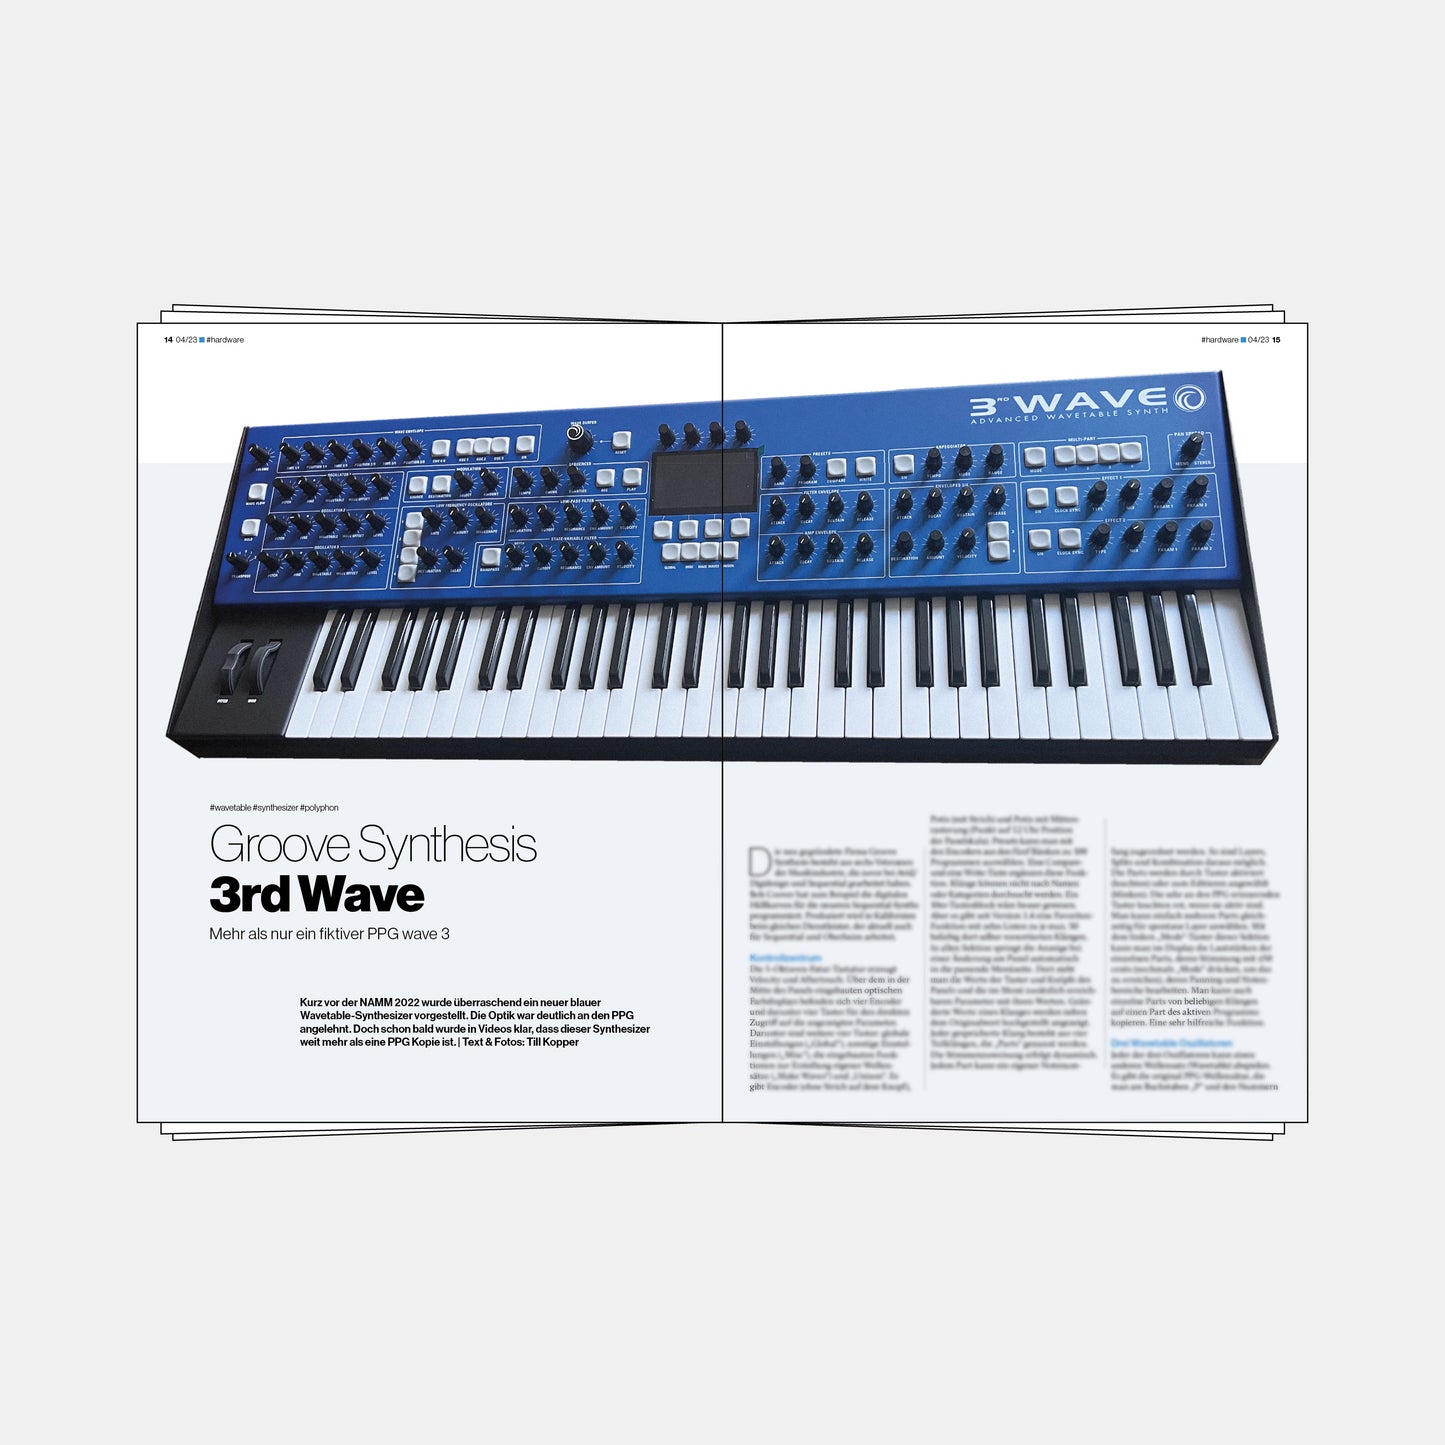 Synthesizer Magazin | Ausgabe 99 | Oktober 2023 | ePaper